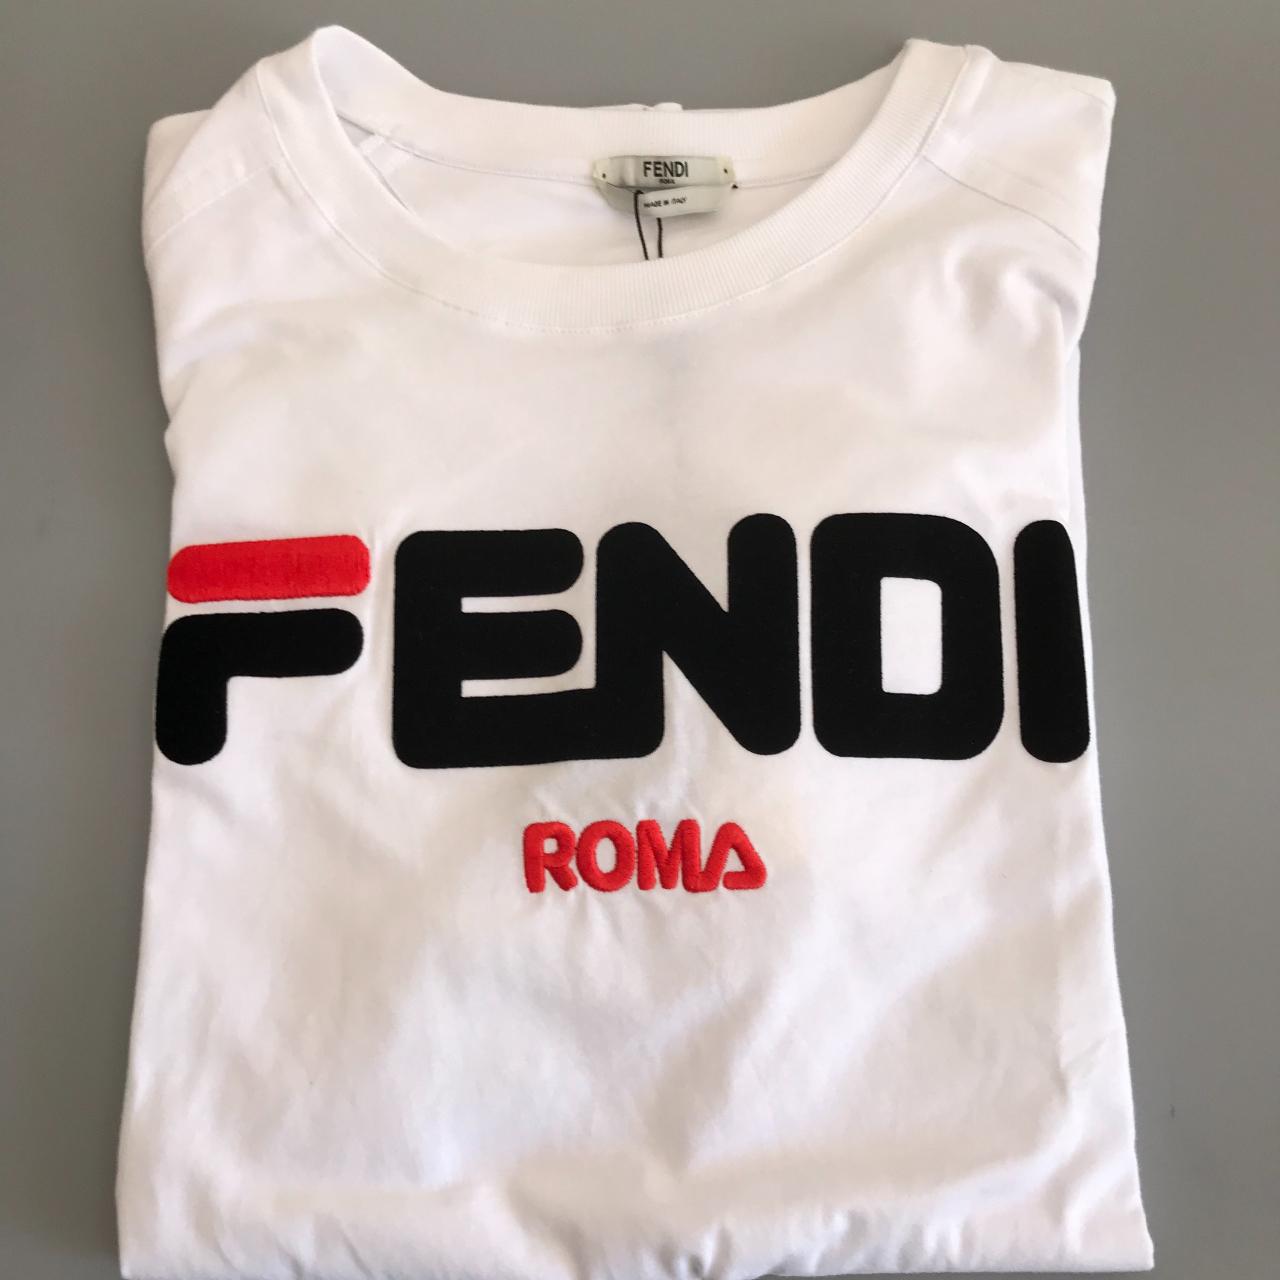 Fendi Mania white cotton jersey t-shirt is - Depop